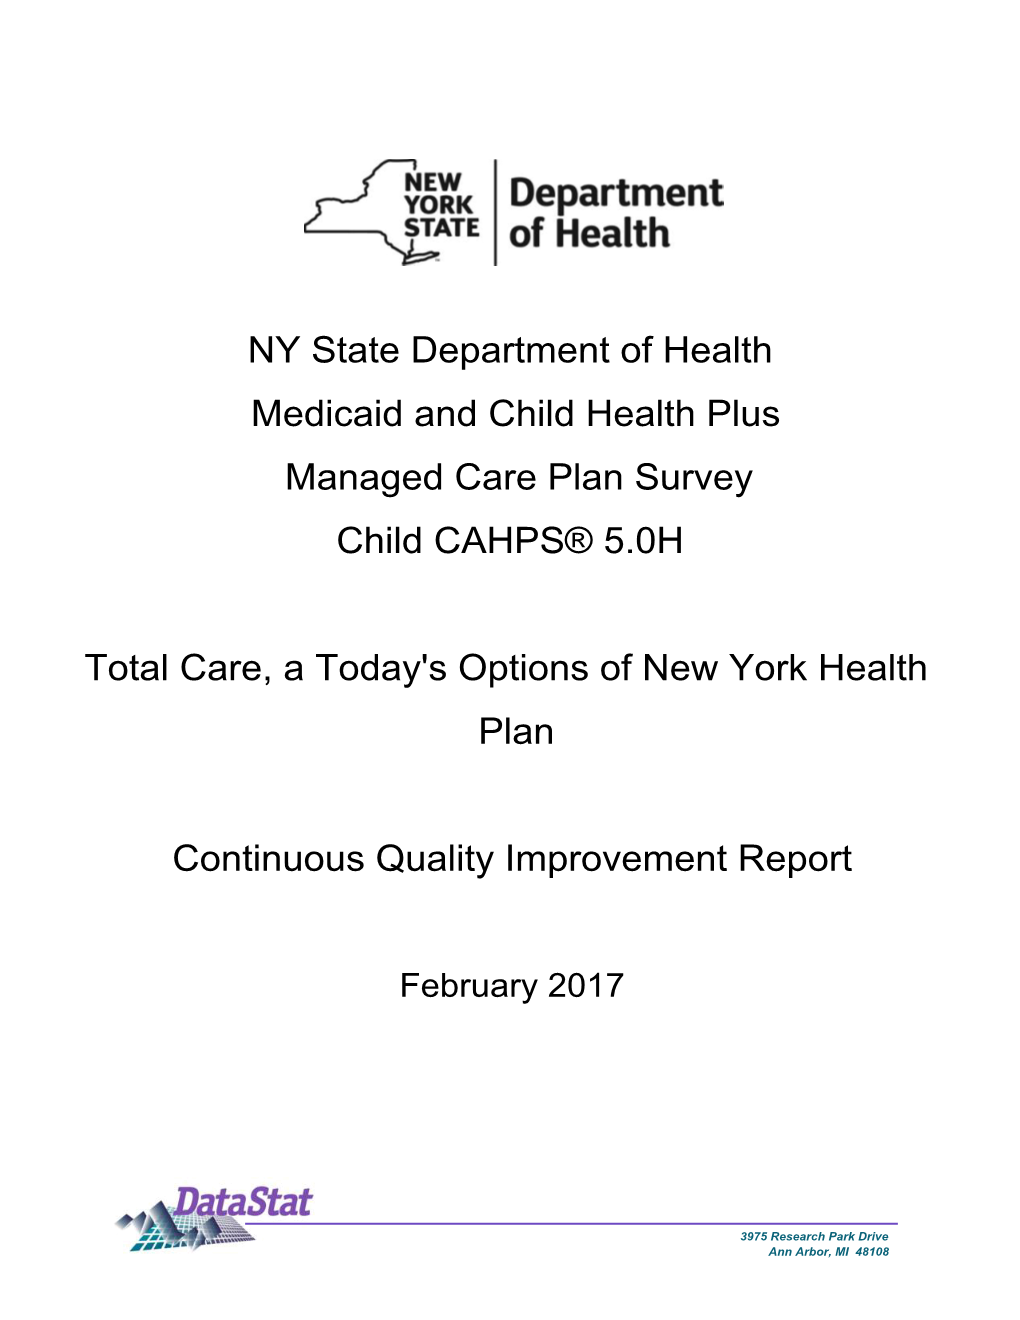 Total Care CAHPS 5.0H NYSDOH 2017 Child Continuous Quality Improvement Report